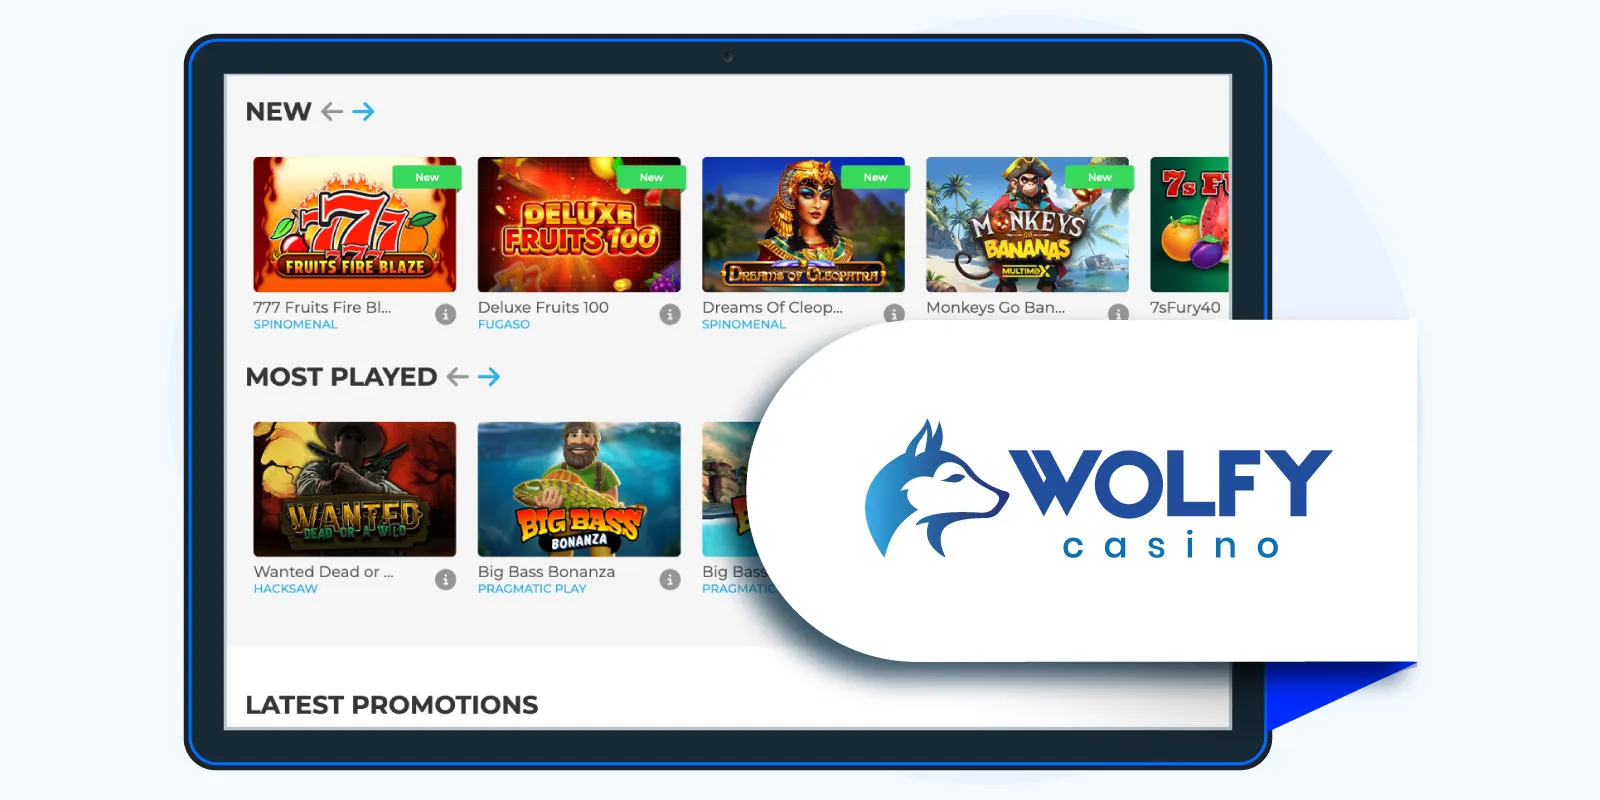 #1. Wolfy Casino - 15 Free Spins as €3.75 No Deposit Bonus